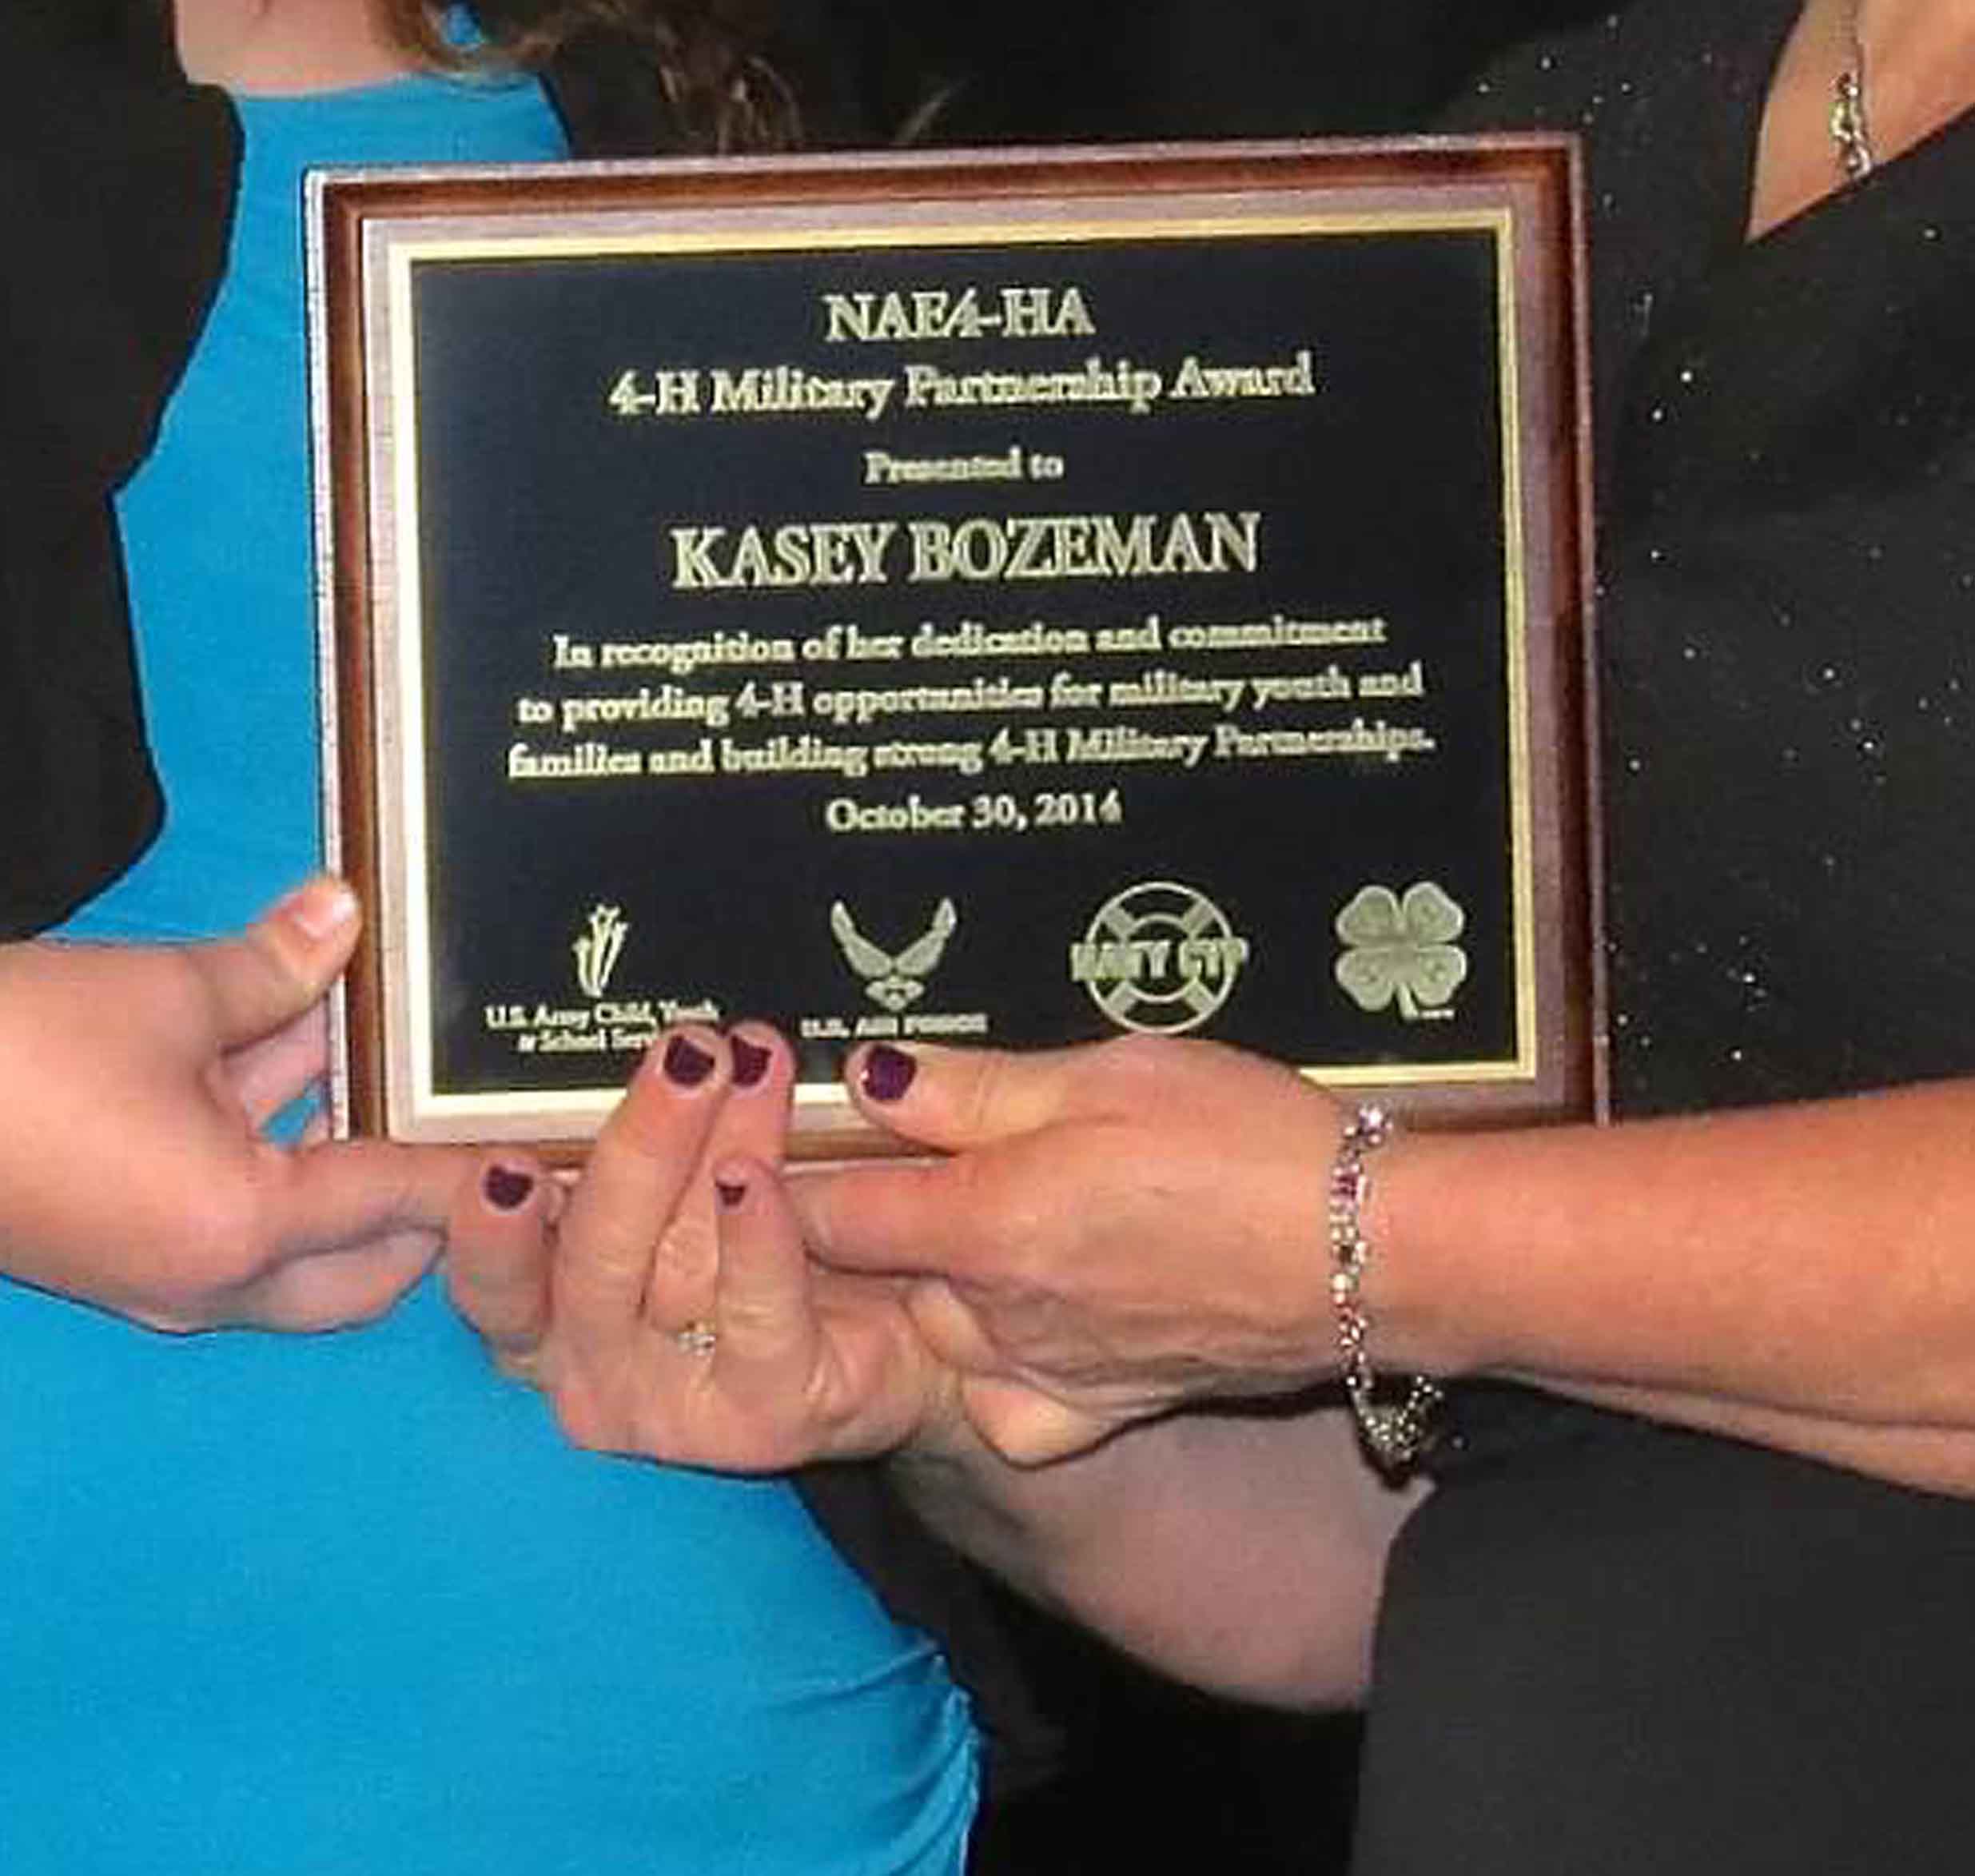 Pam Van Horn, president of the National Association of Extension 4-H congratulates Kasey Bozeman on receiving the association's 4-H Military Partnerships Award.